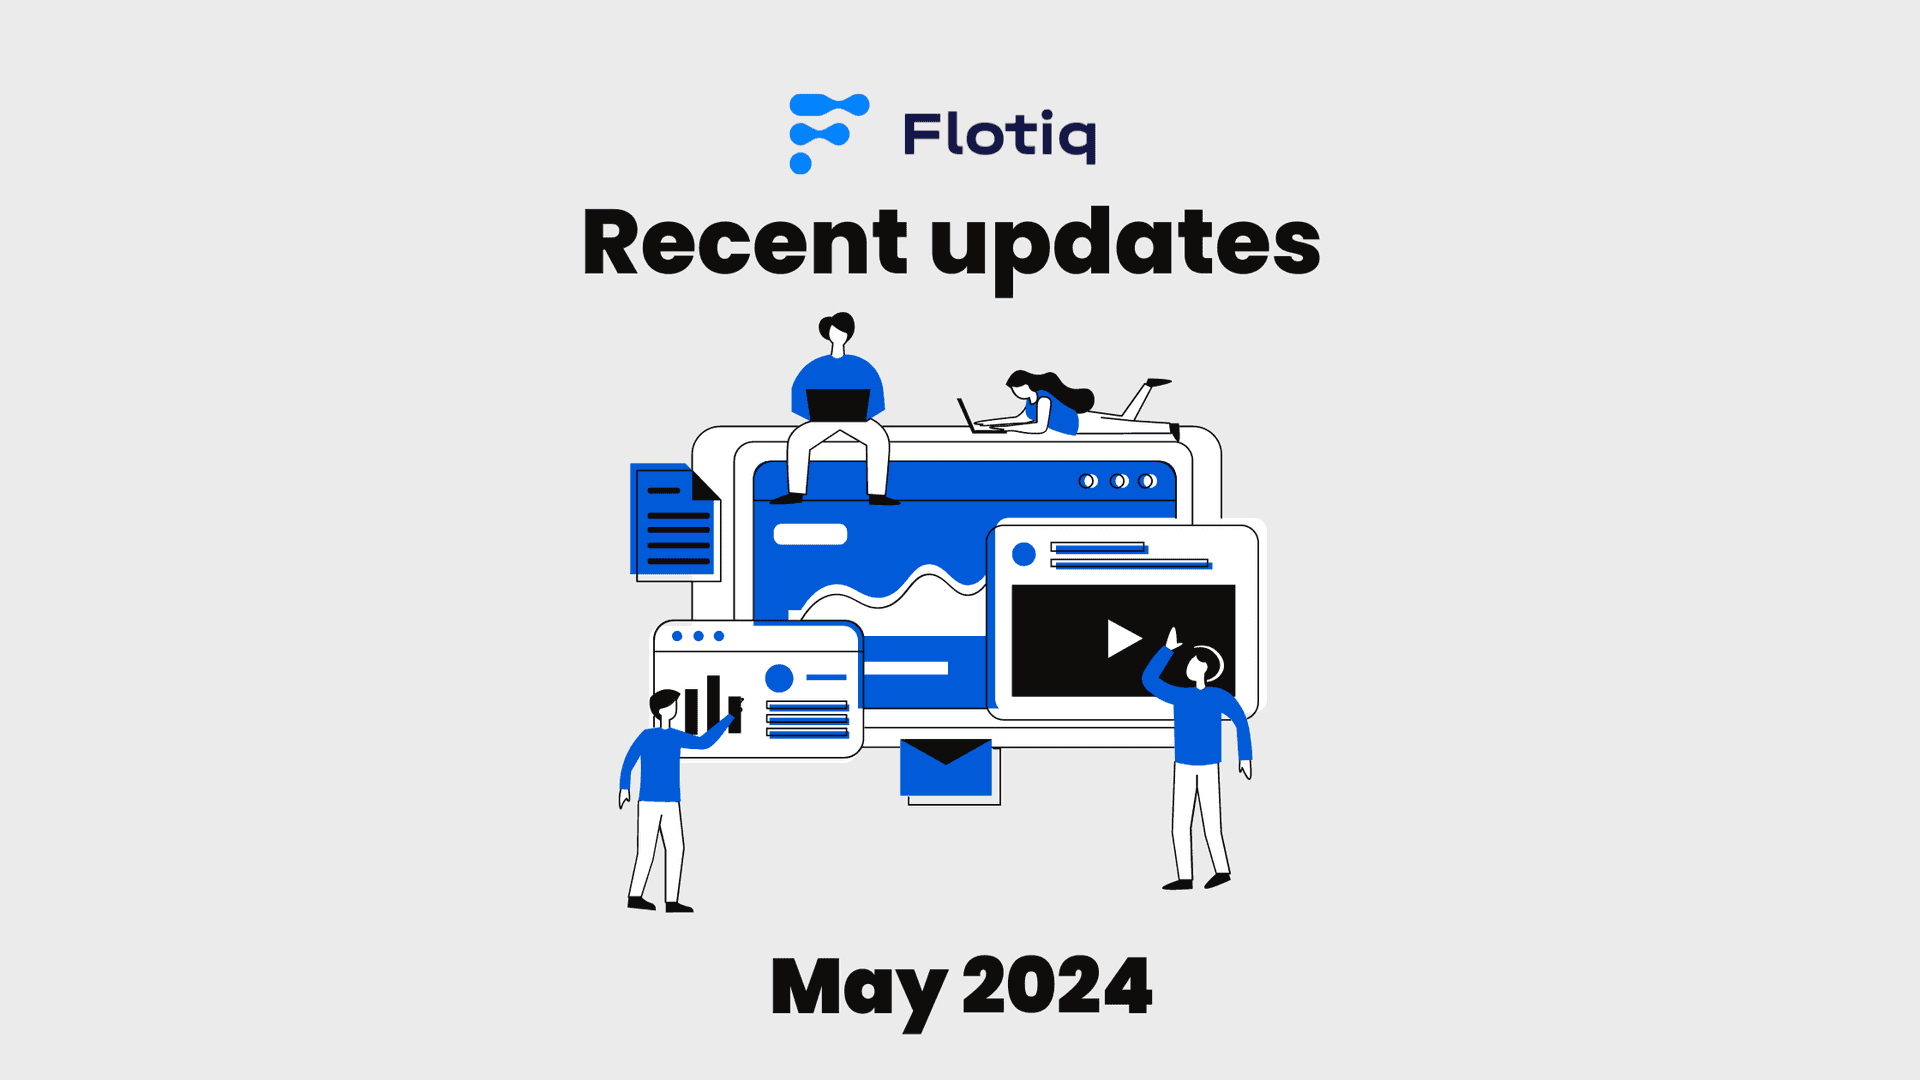 Recent updates in Flotiq (May 2024)